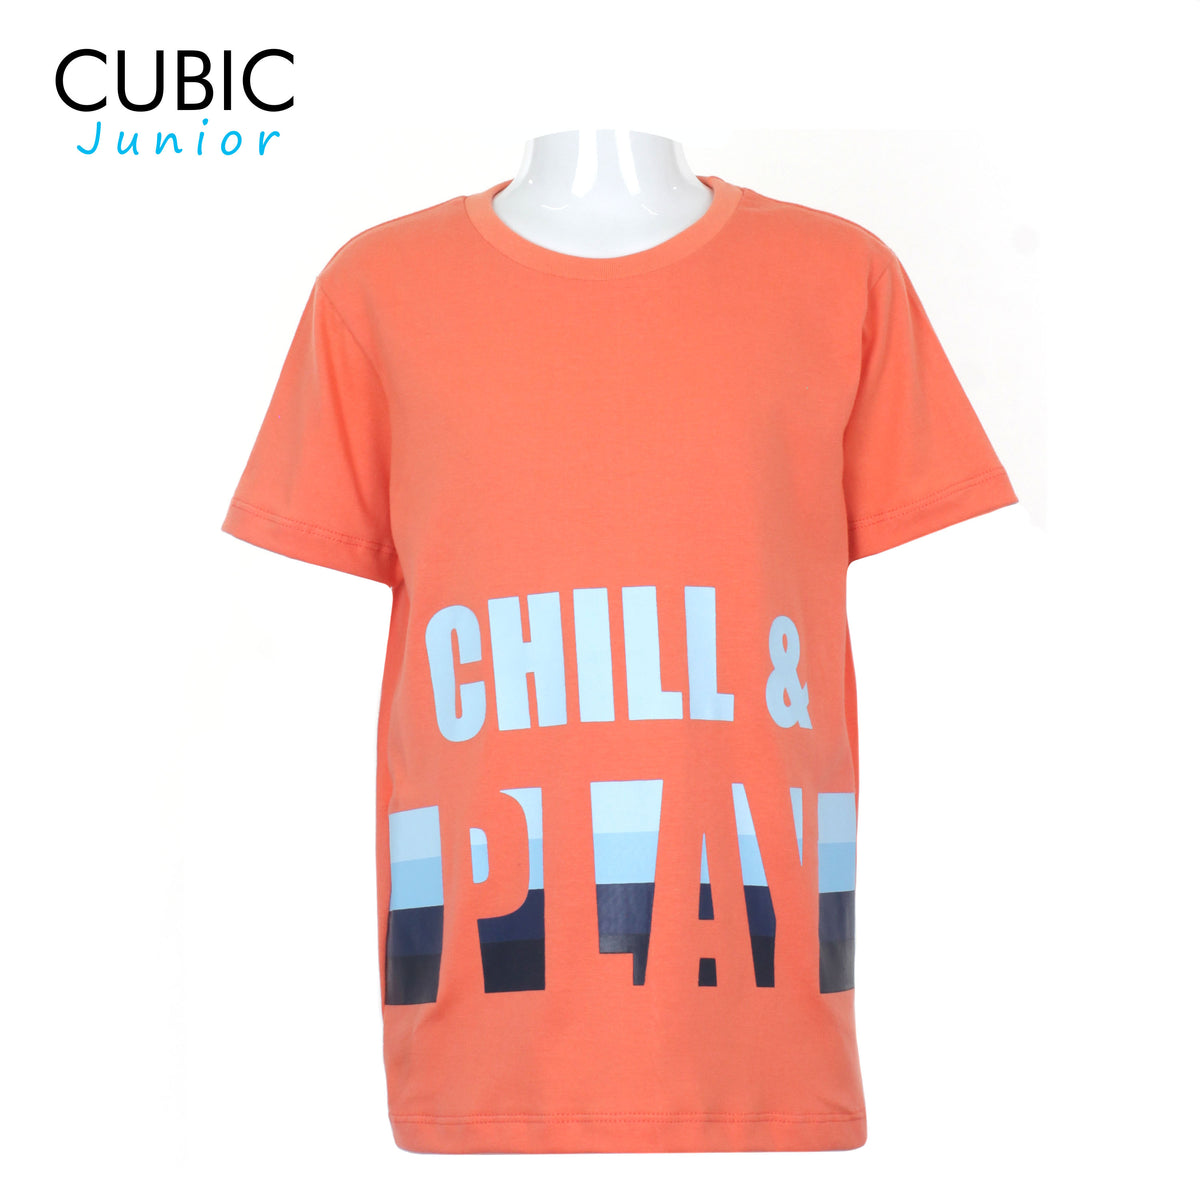 Cubic Boys Kids Round Neck Chill & Play Graphic Print Design T-shirt Shirt Top for Boys - CKJ2219R